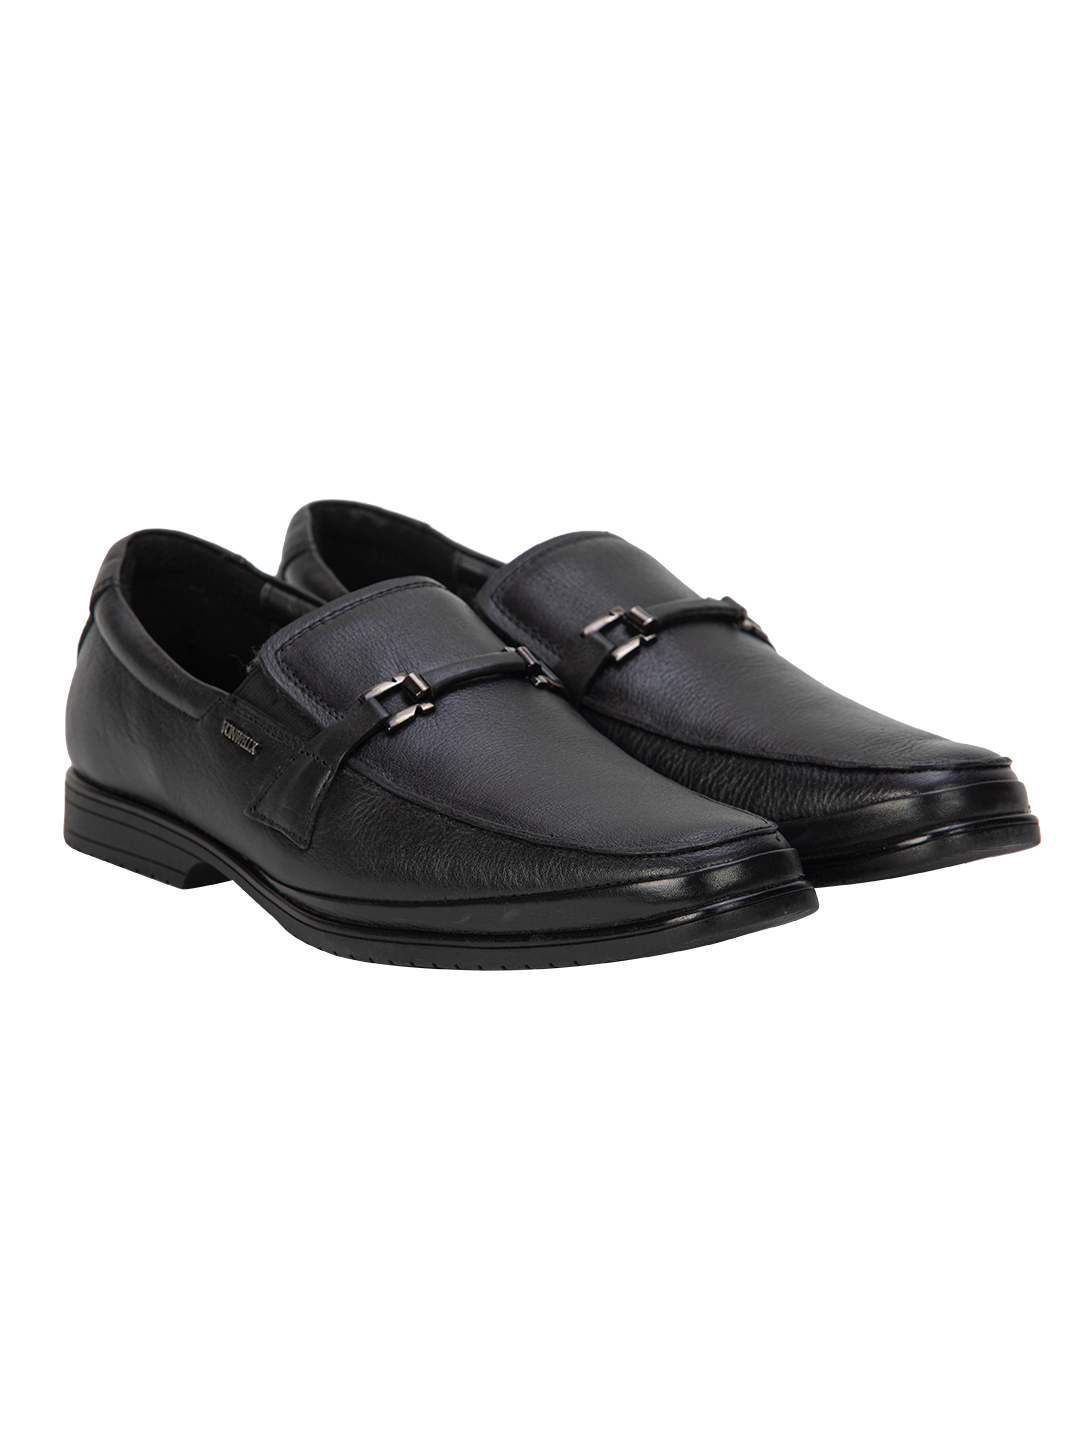 Buy Von Wellx Germany Comfort Black Jace Shoes Online in Sri Lanka